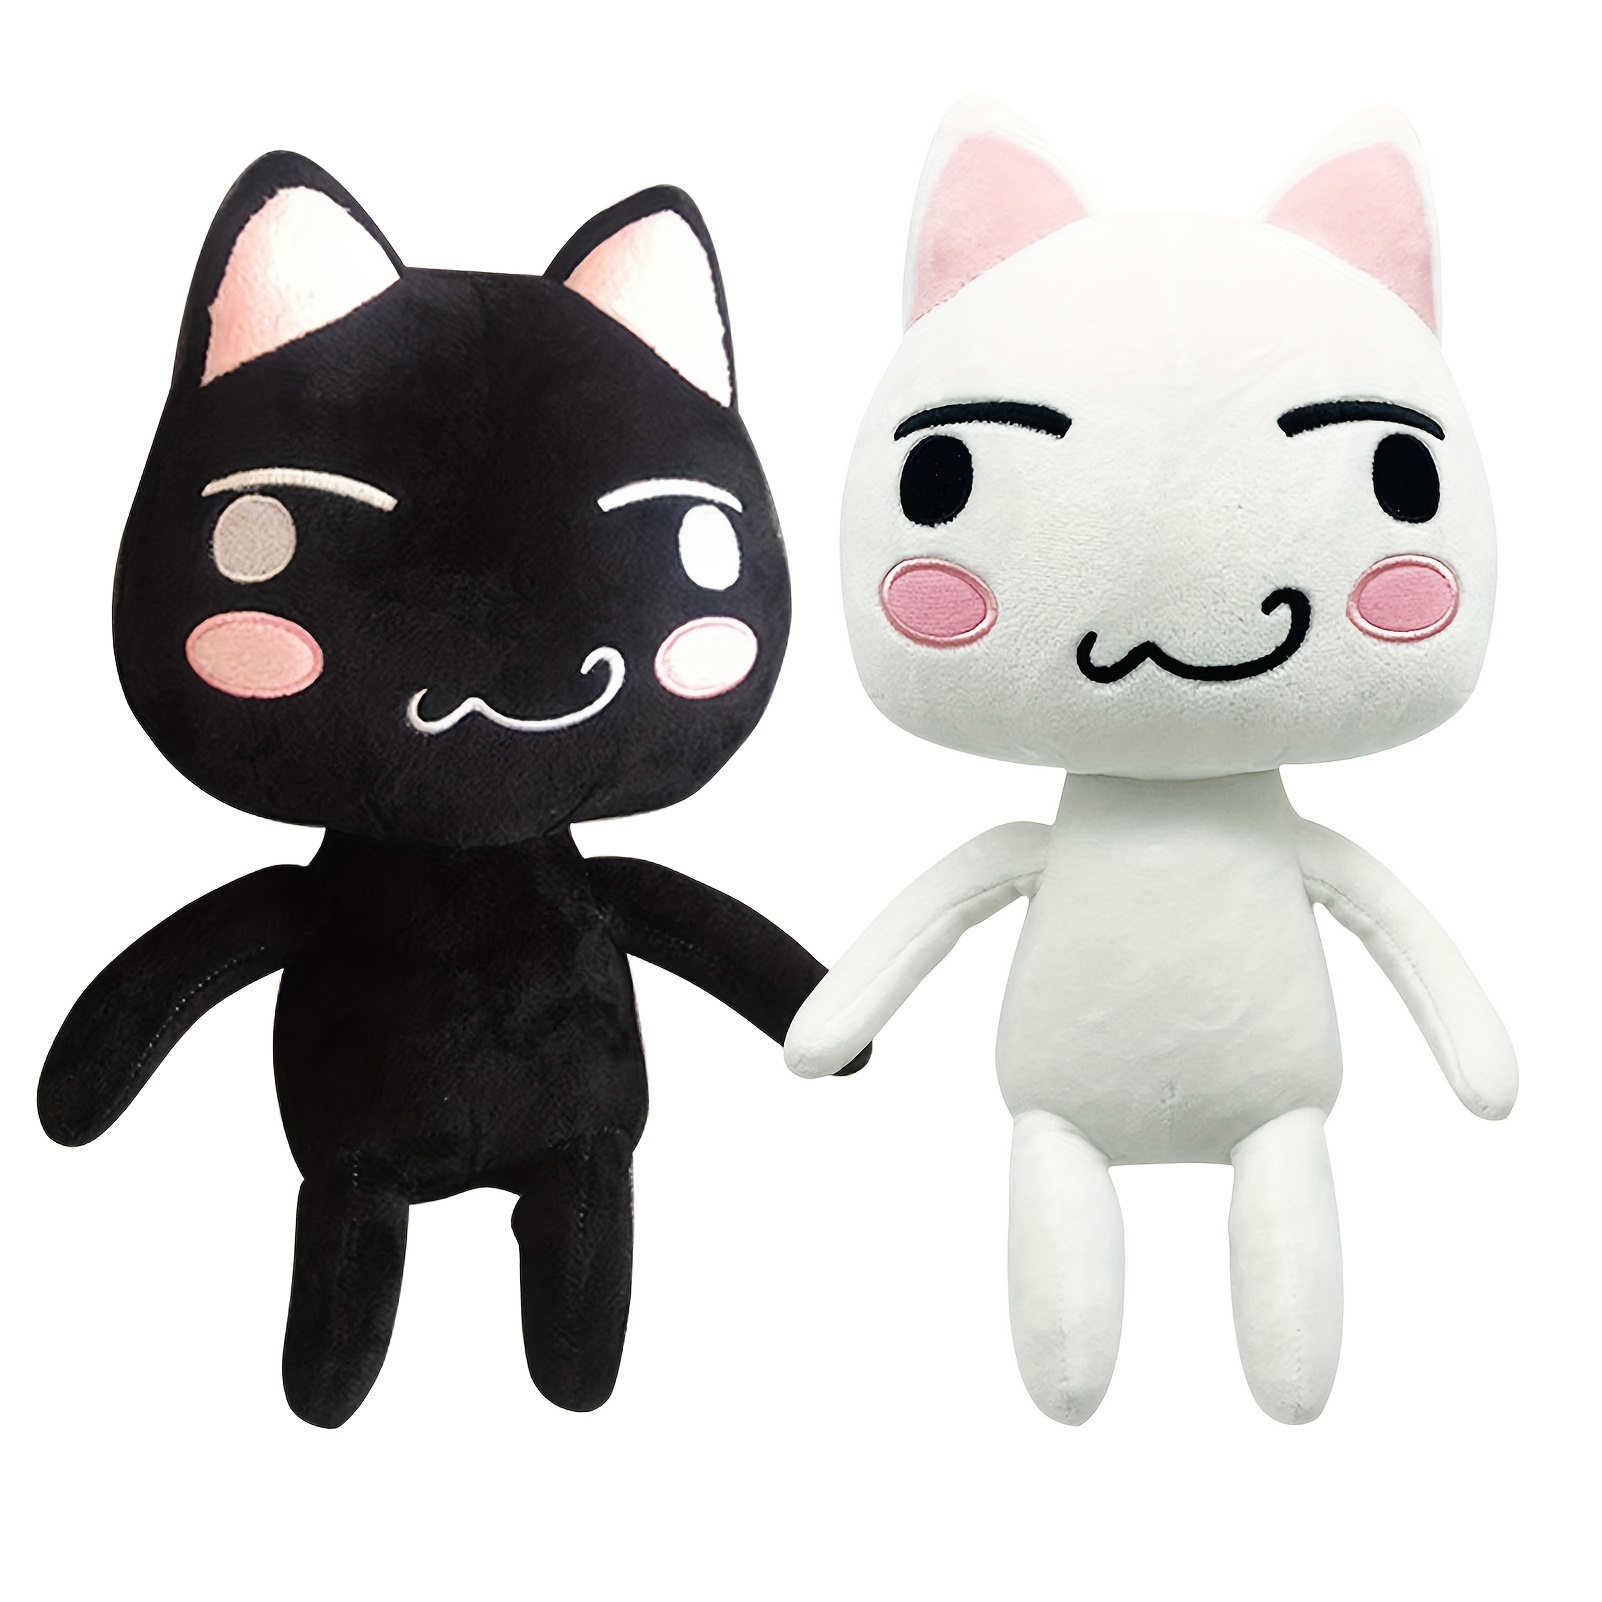 Omori plush toy 20cm plush toy little partner Cute Gift Black